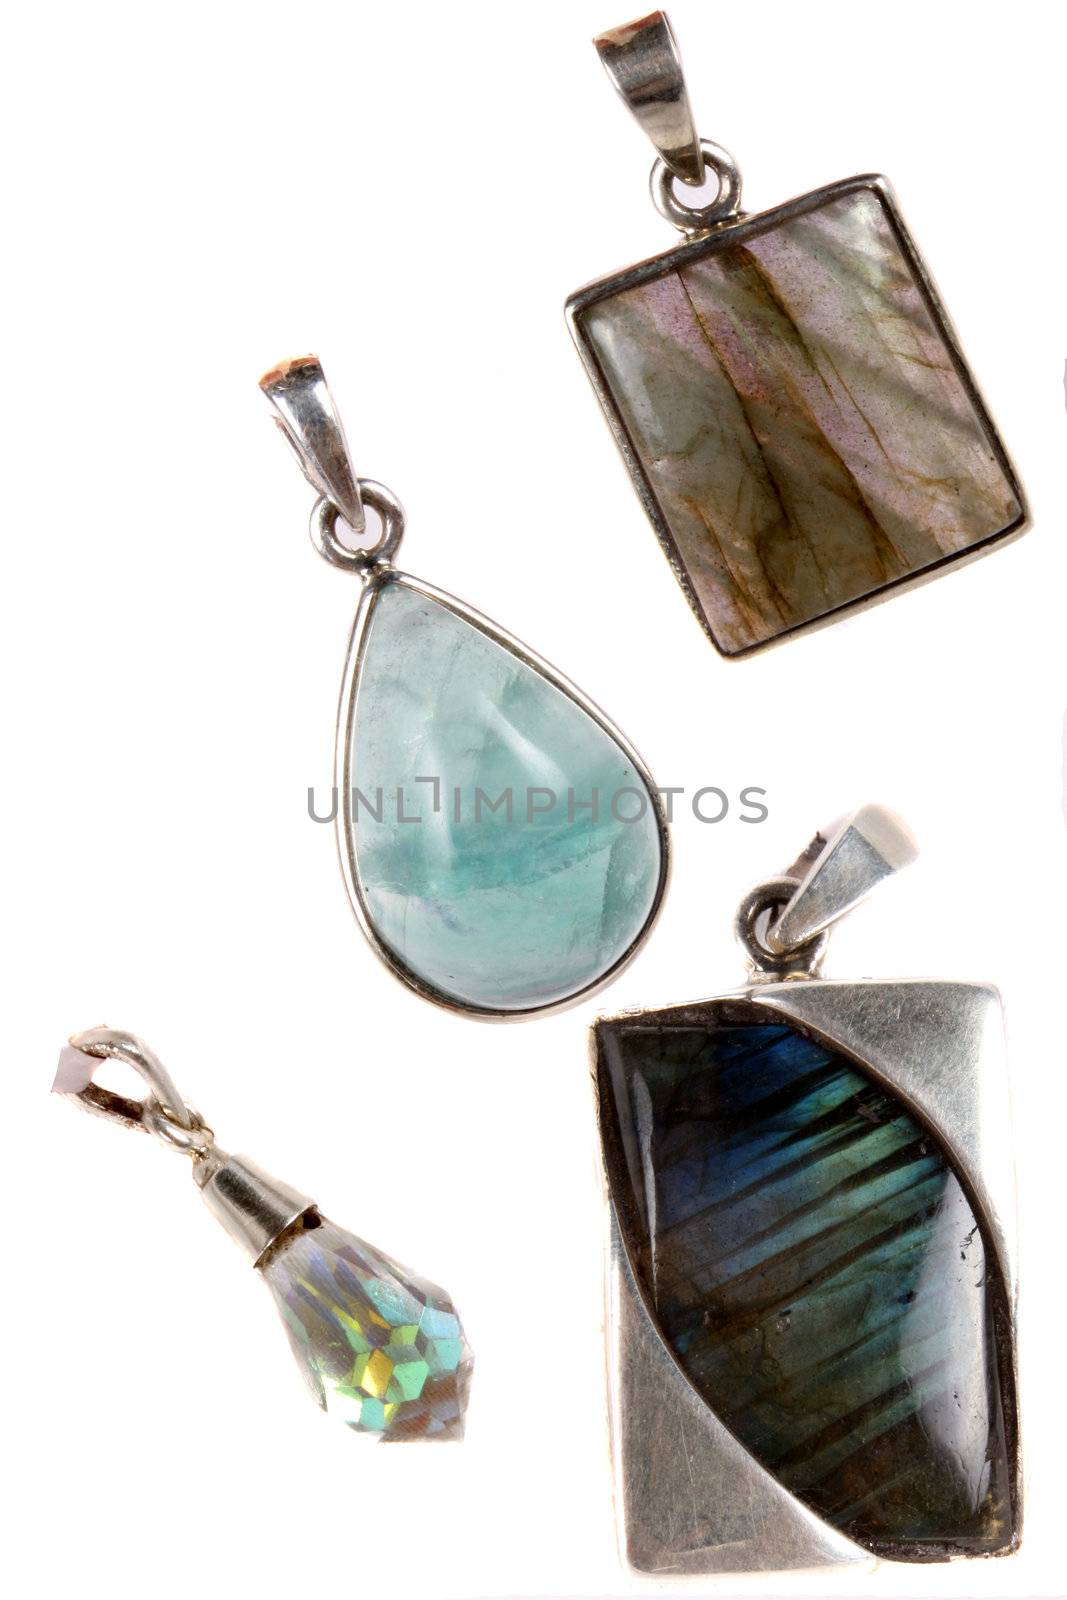 A set of silver pendants made with gemstones like aquamarine, labadorite and diamond, on white studio background.